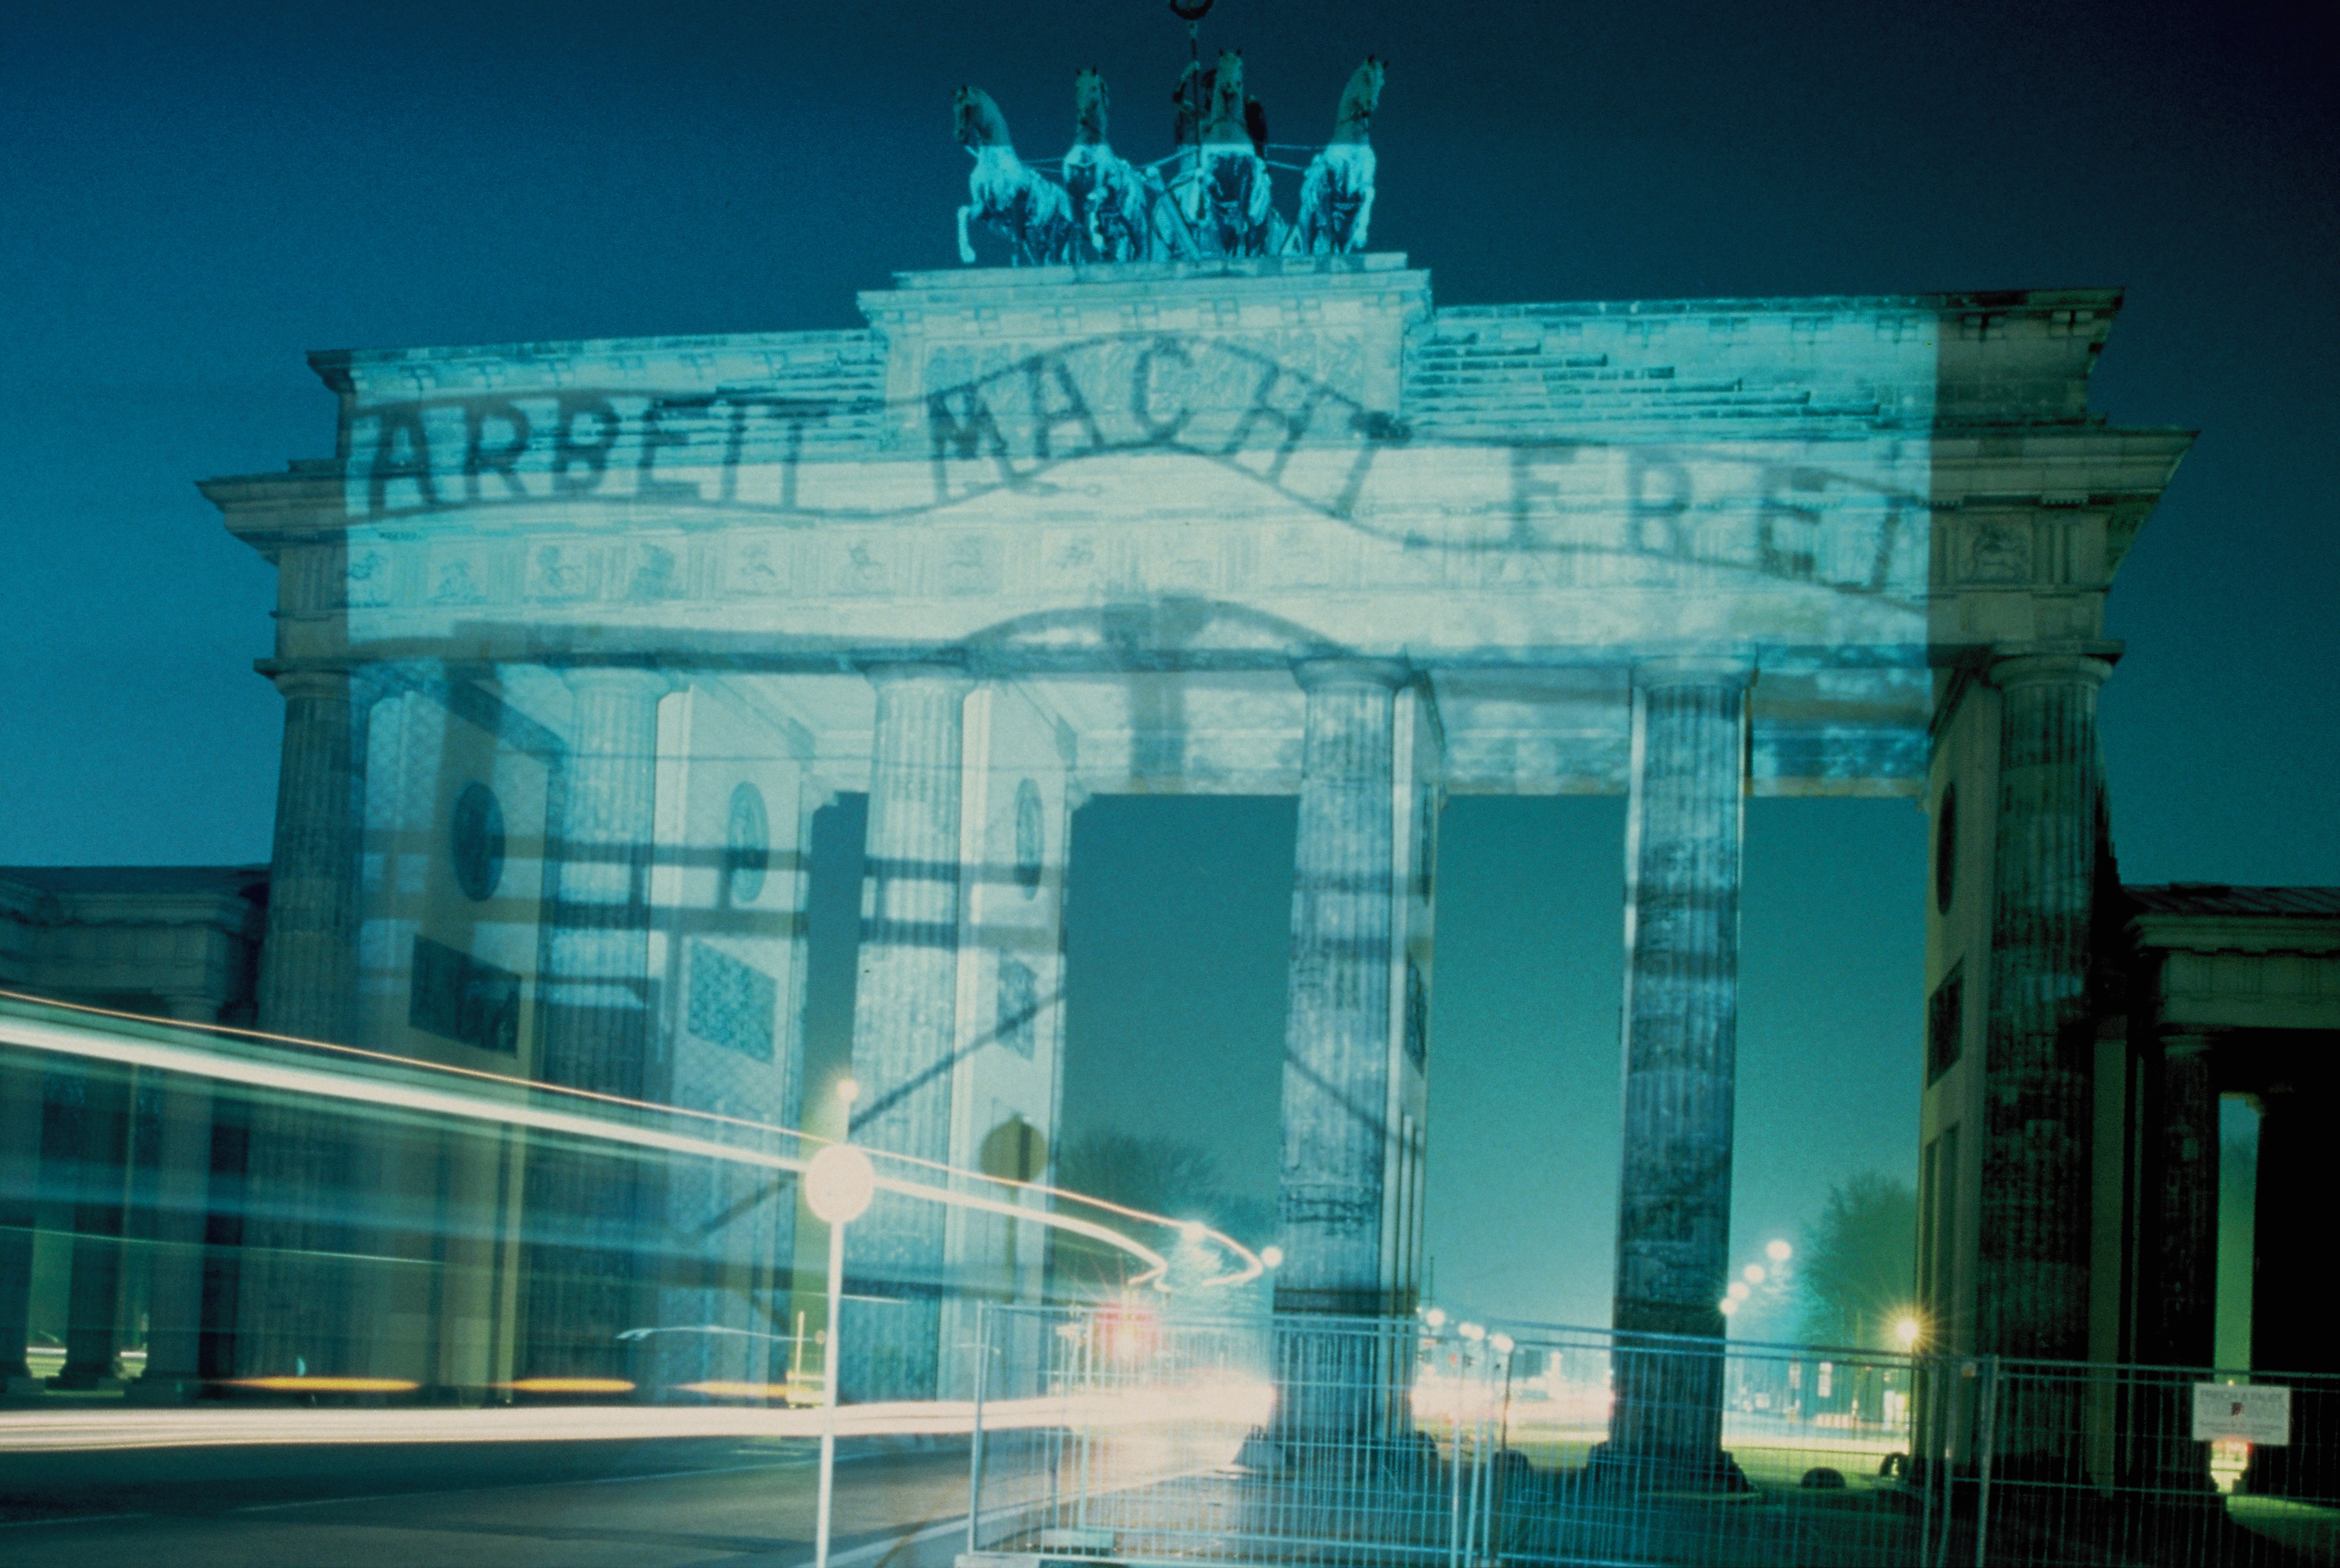 The Gateways of the Germans, Horst Hoheisel & Andreas Knitz, light installation on the Brandenburg Gate, Berlin, 27 January 1997